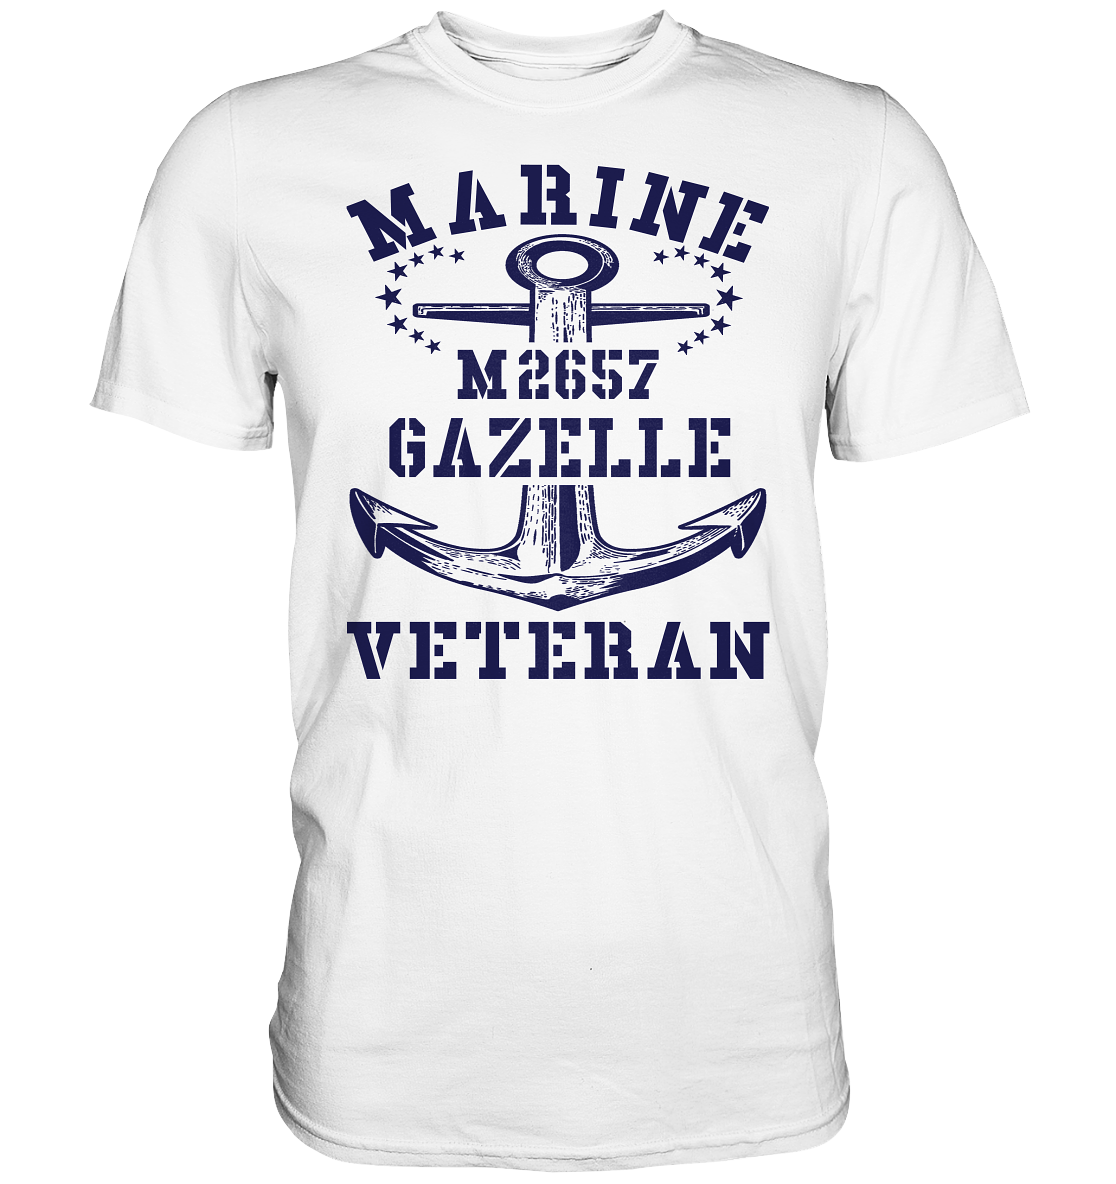 BiMi M2657 GAZELLE Marine Veteran - Premium Shirt